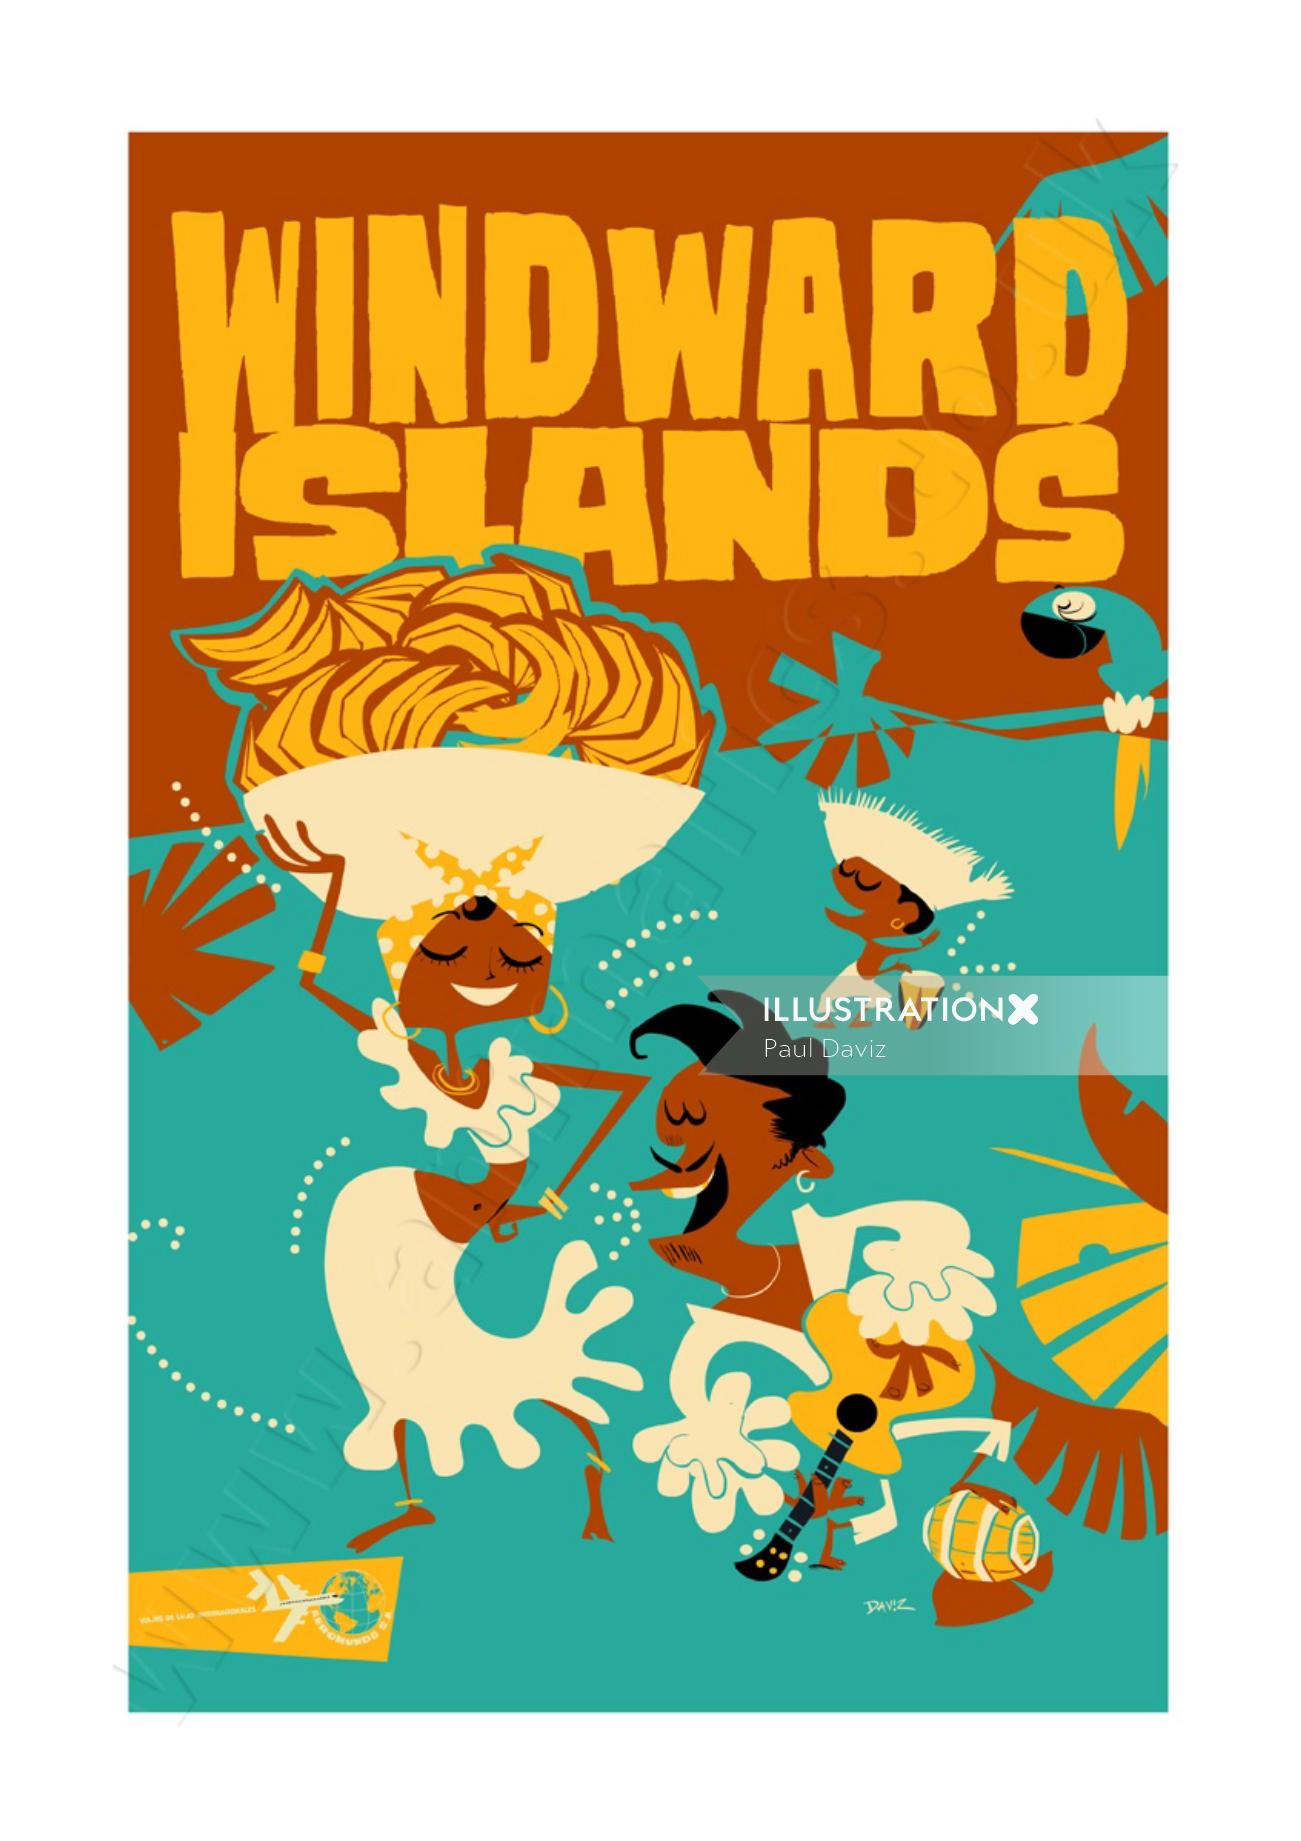 Cartaz de viagem para ilhas Windward